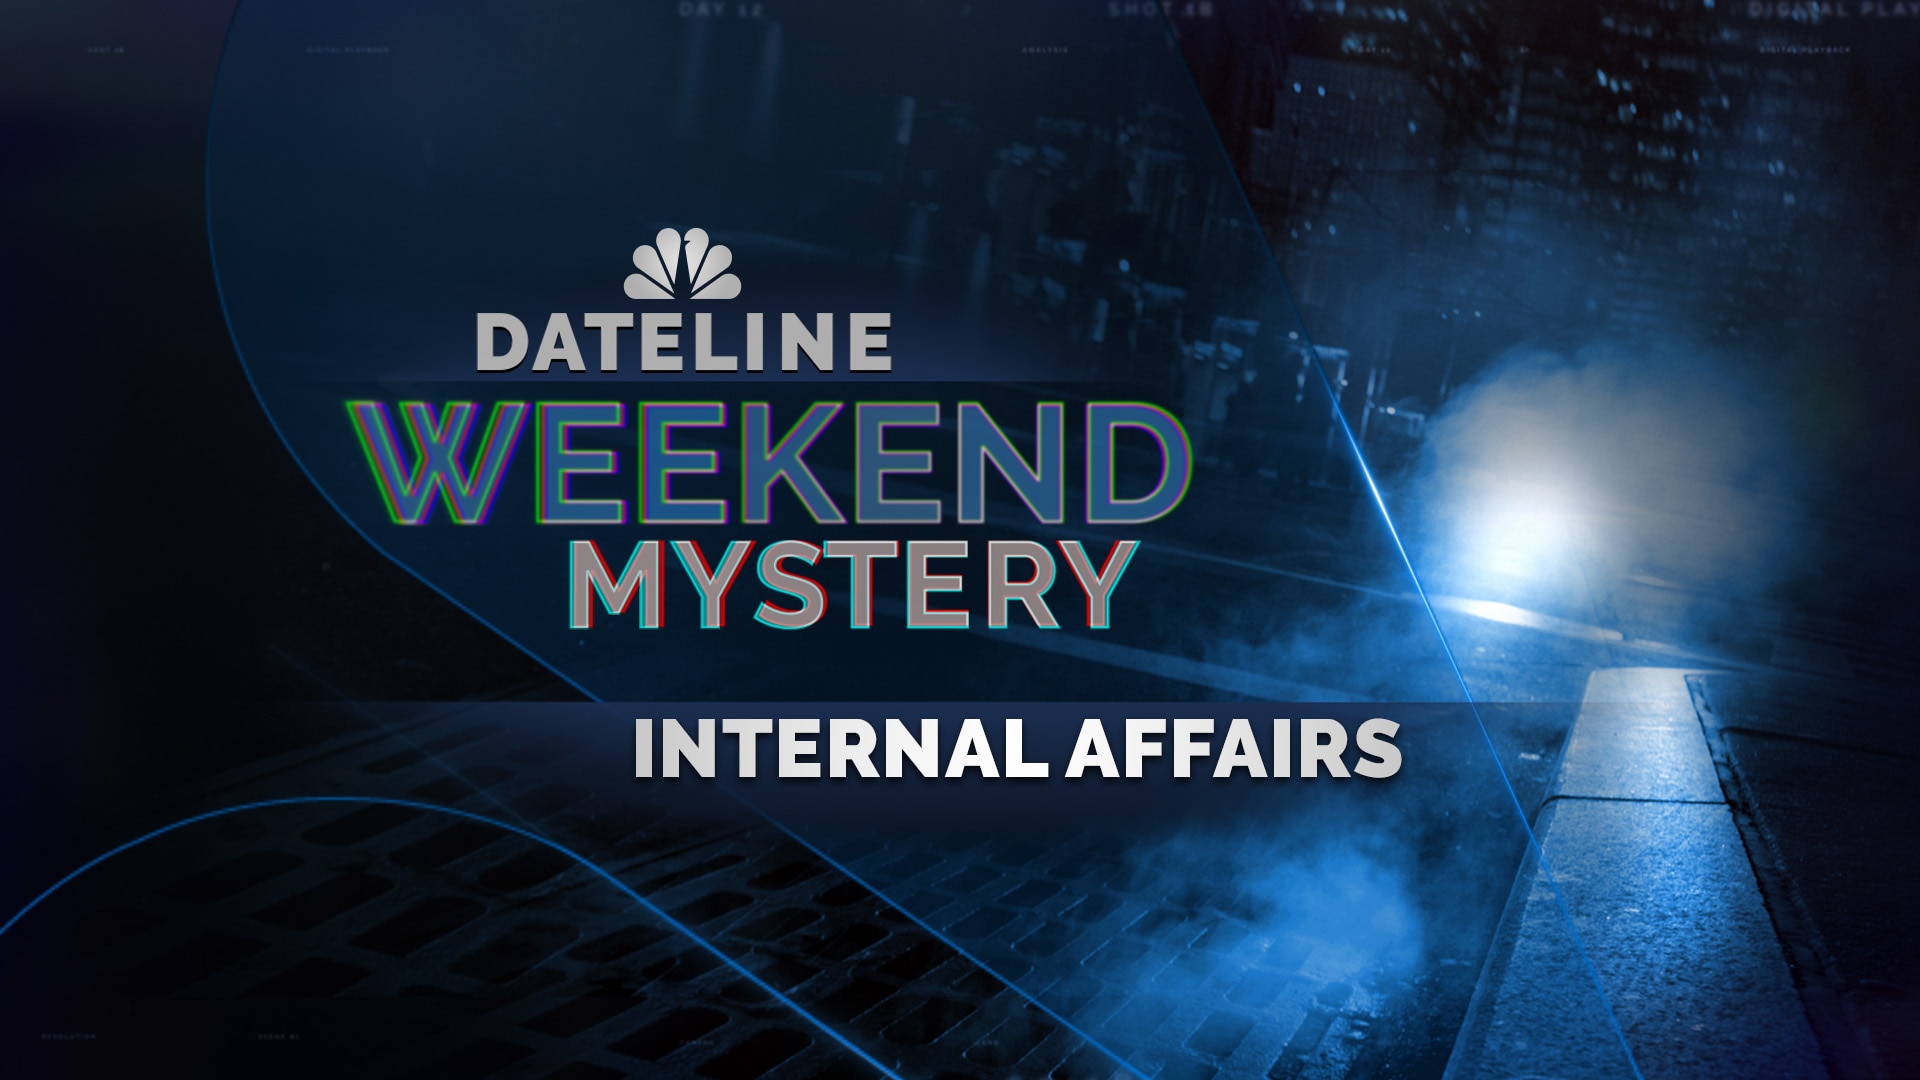 Watch Dateline Episode: Internal Affairs - NBC.com